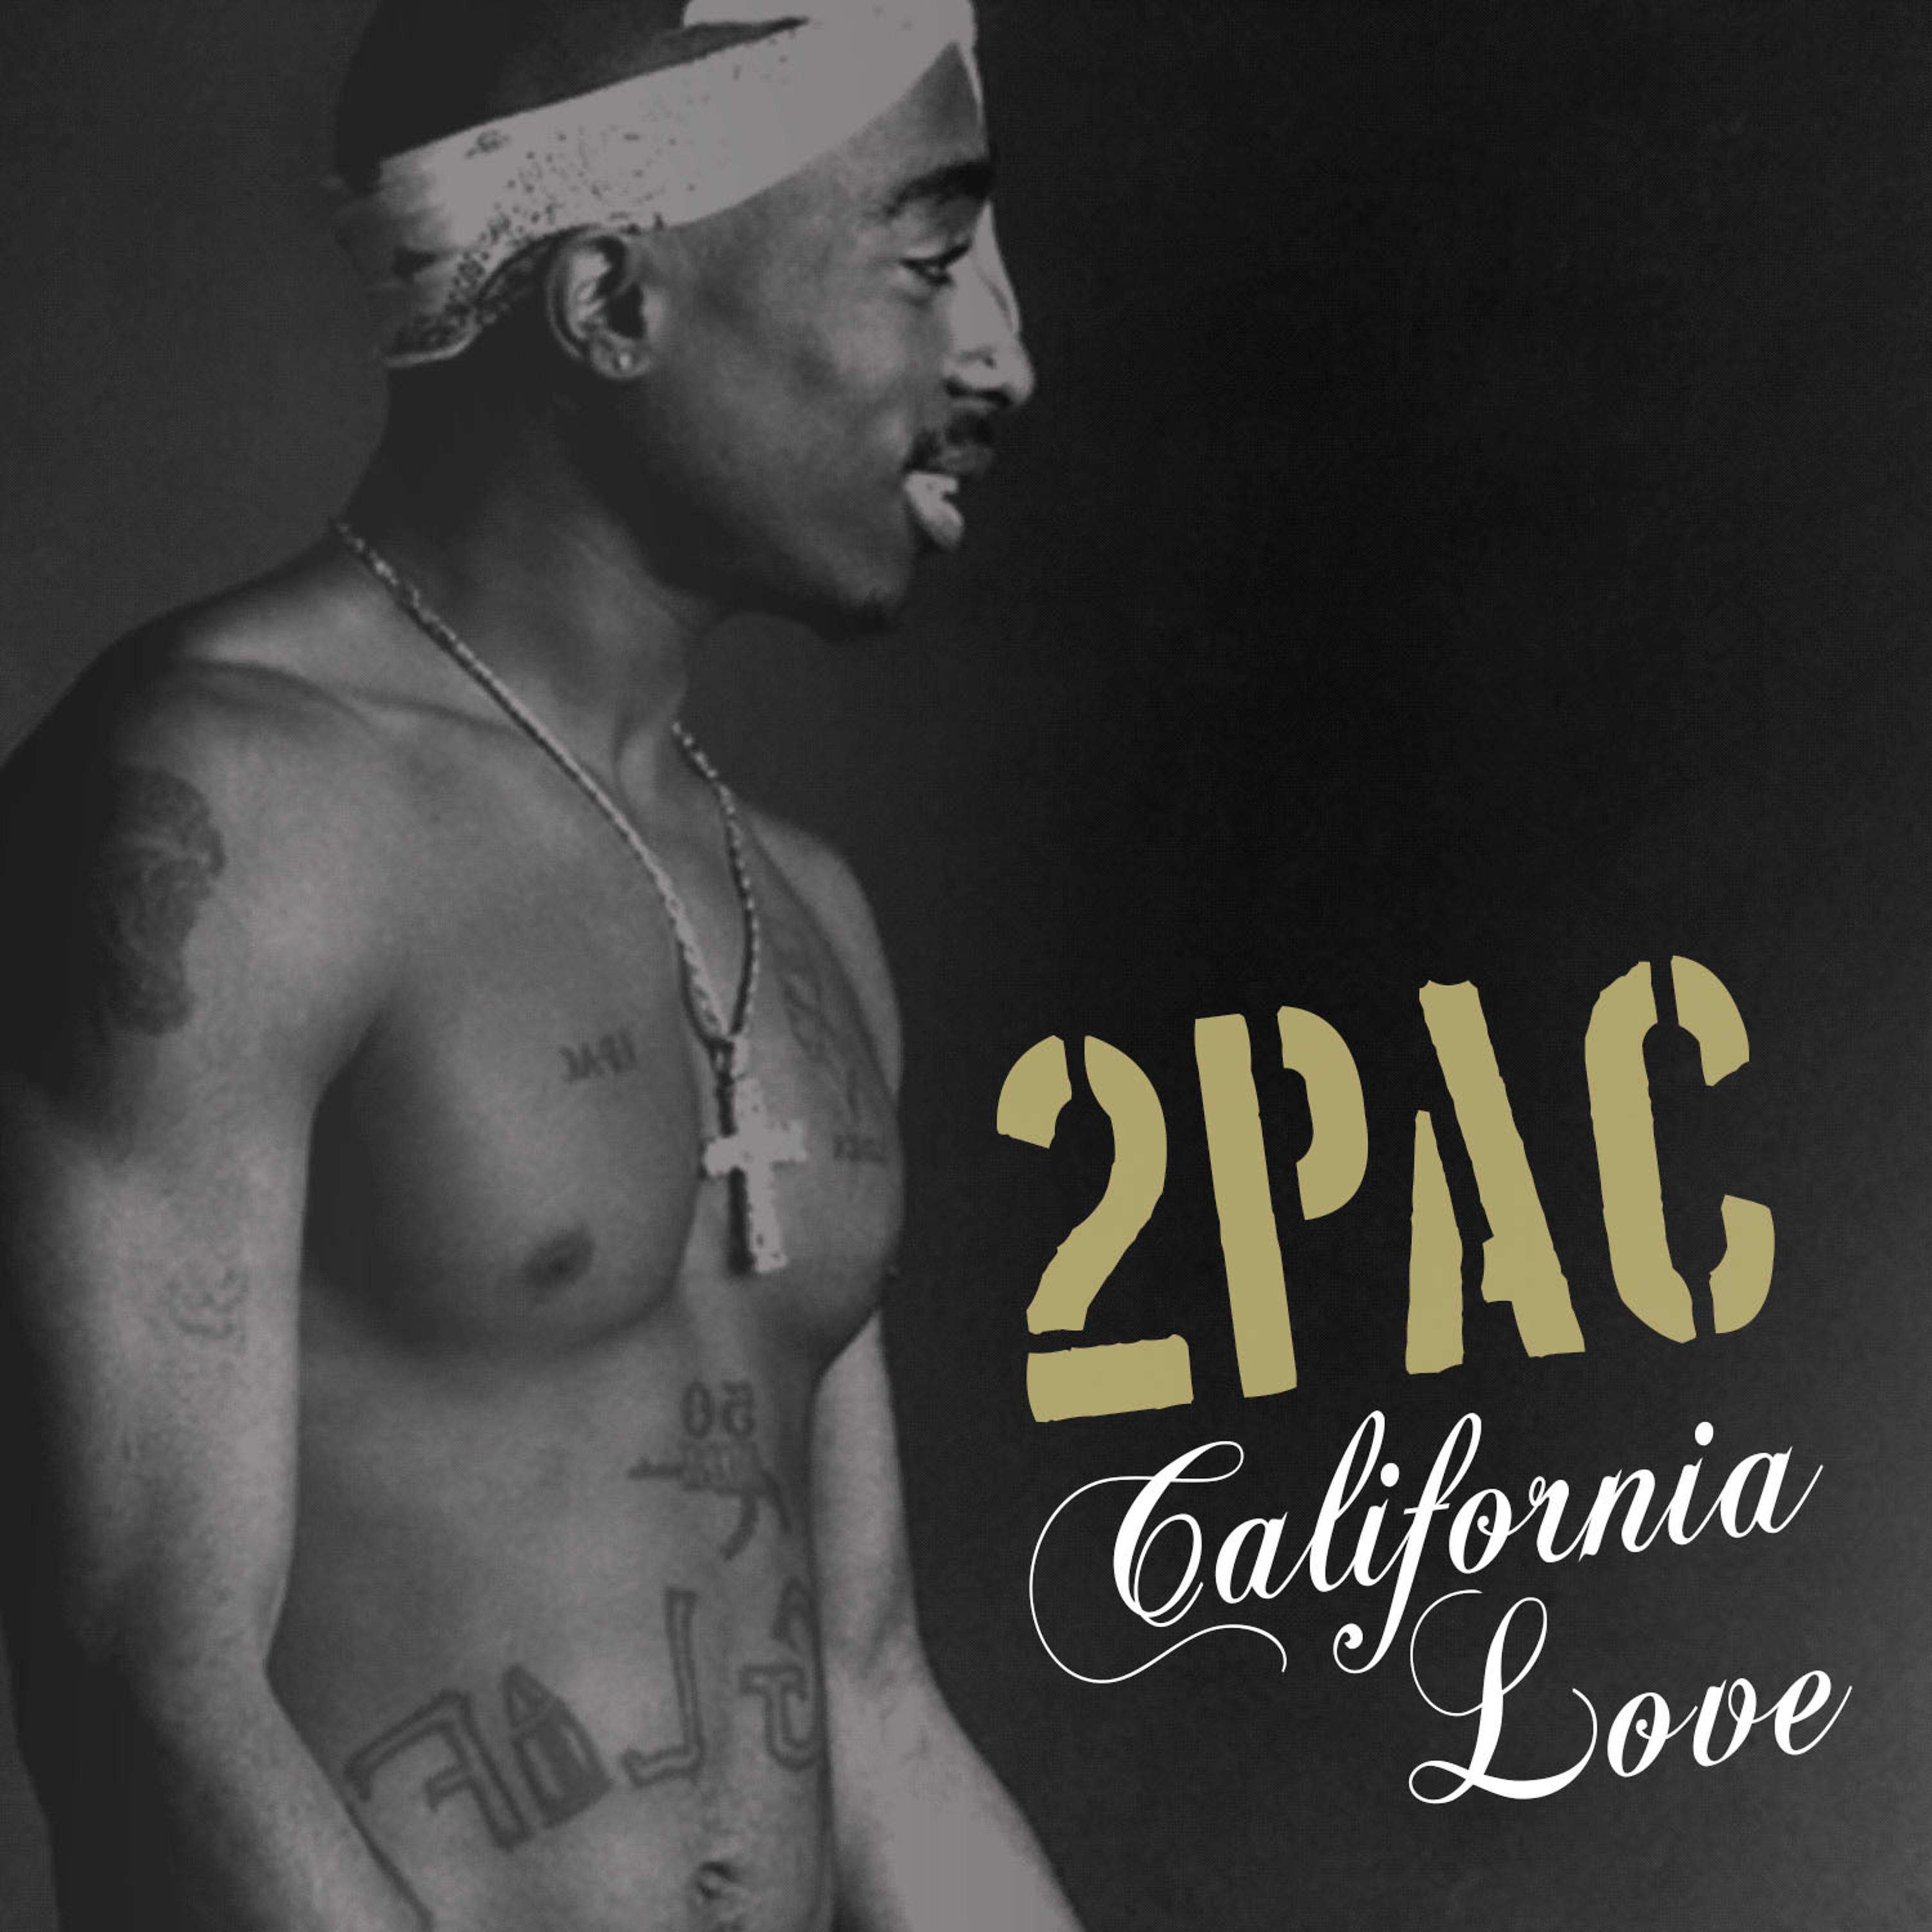 Тупак Шакур обложка. 2pac California Love обложка. 2пак музыкант. Тупак обложка альбома.